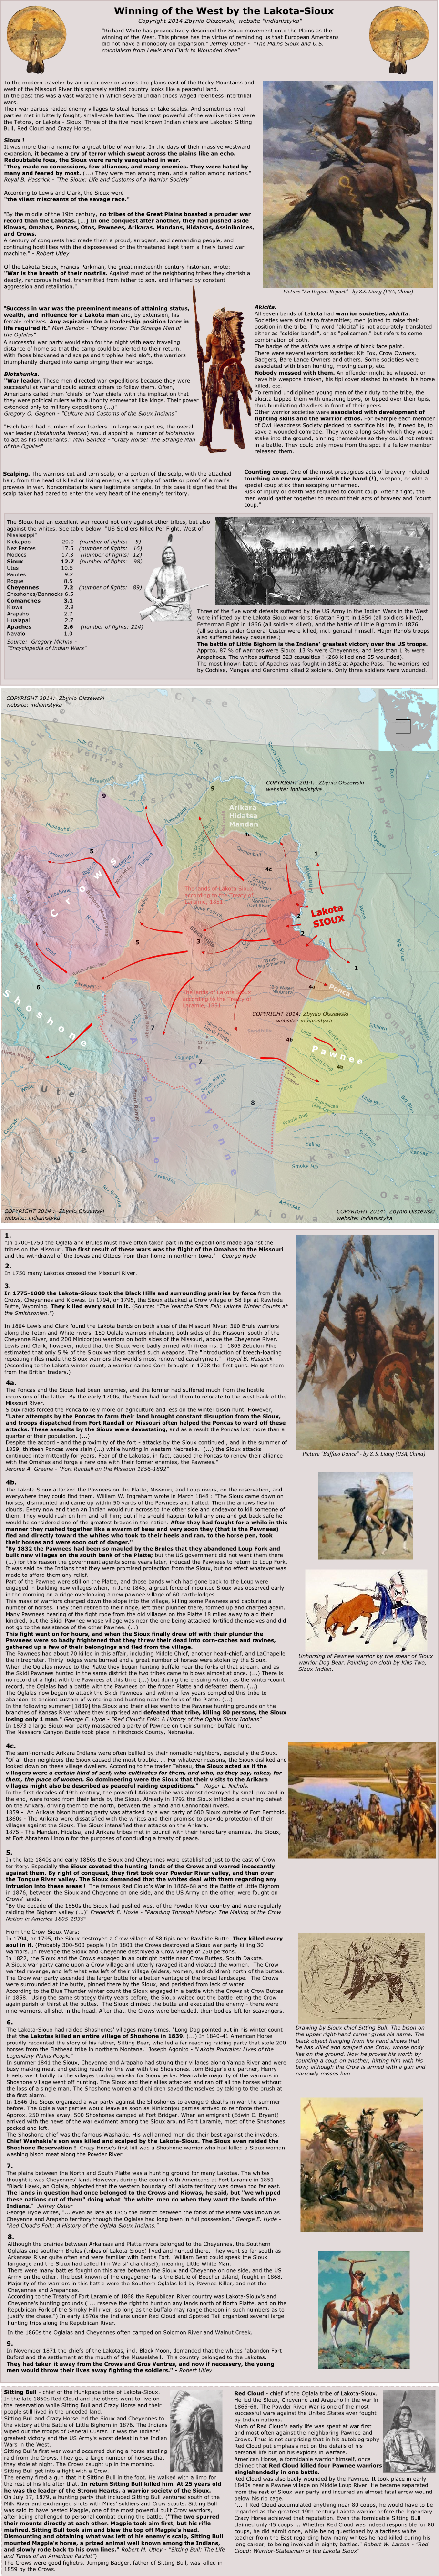 Winning of the West.
Map of the Sioux Indians expansion.
Lands of Lakota, Nakota and Dakota.